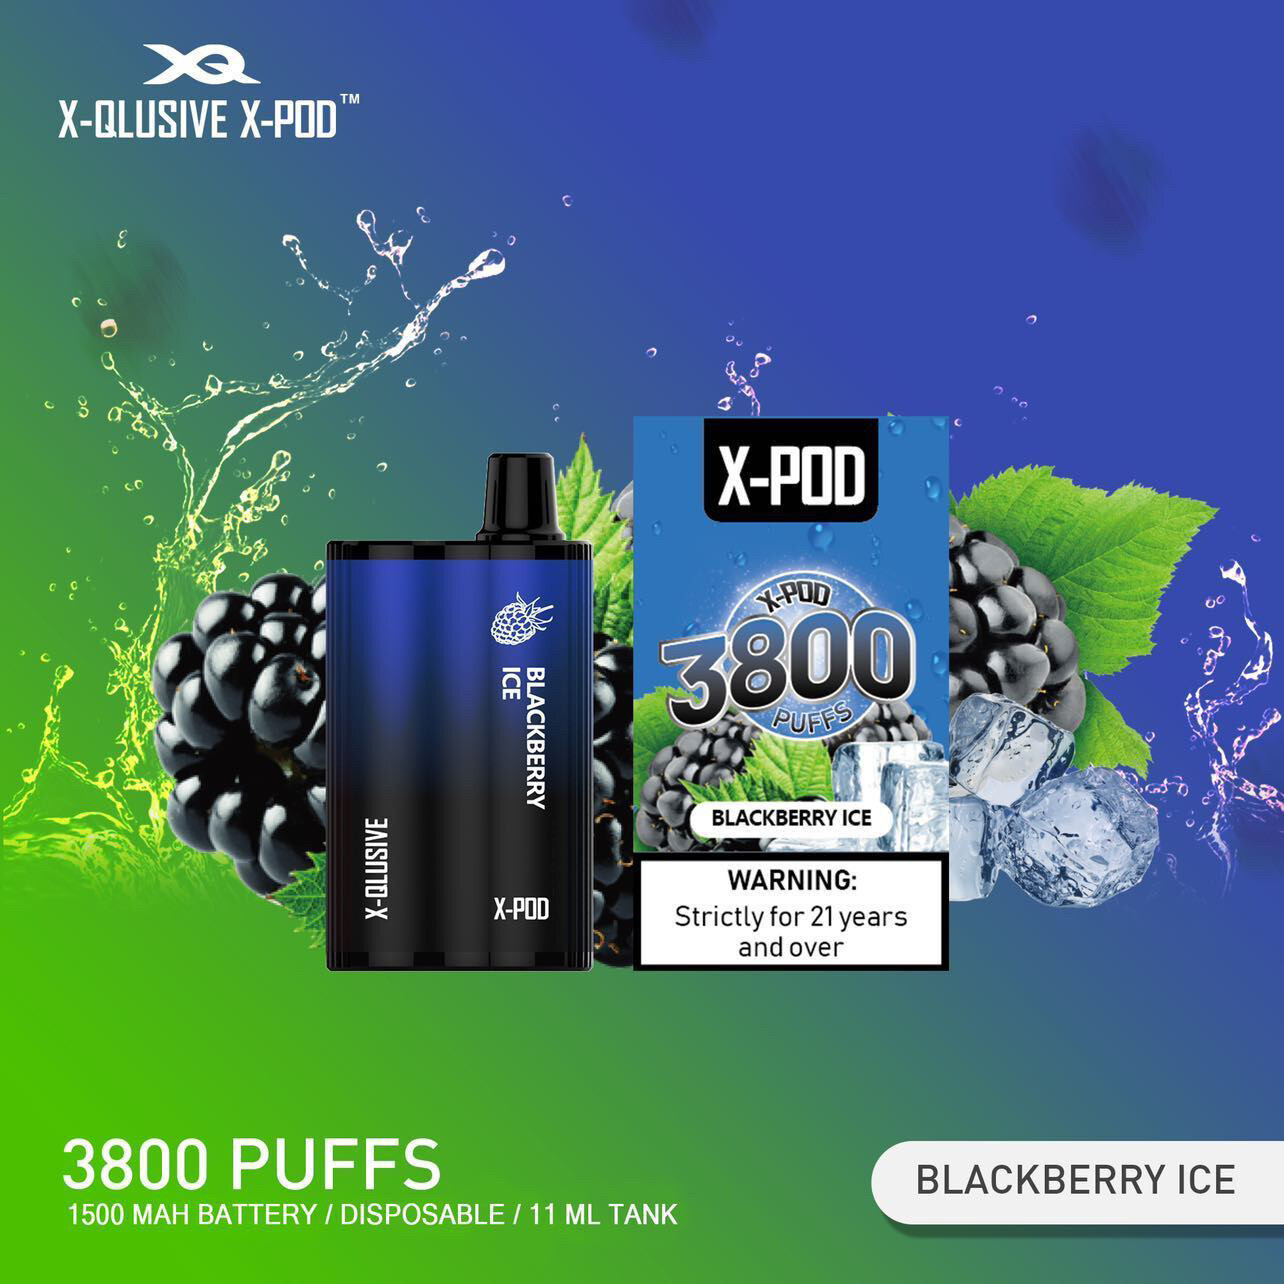 XPOD Blackberry ice